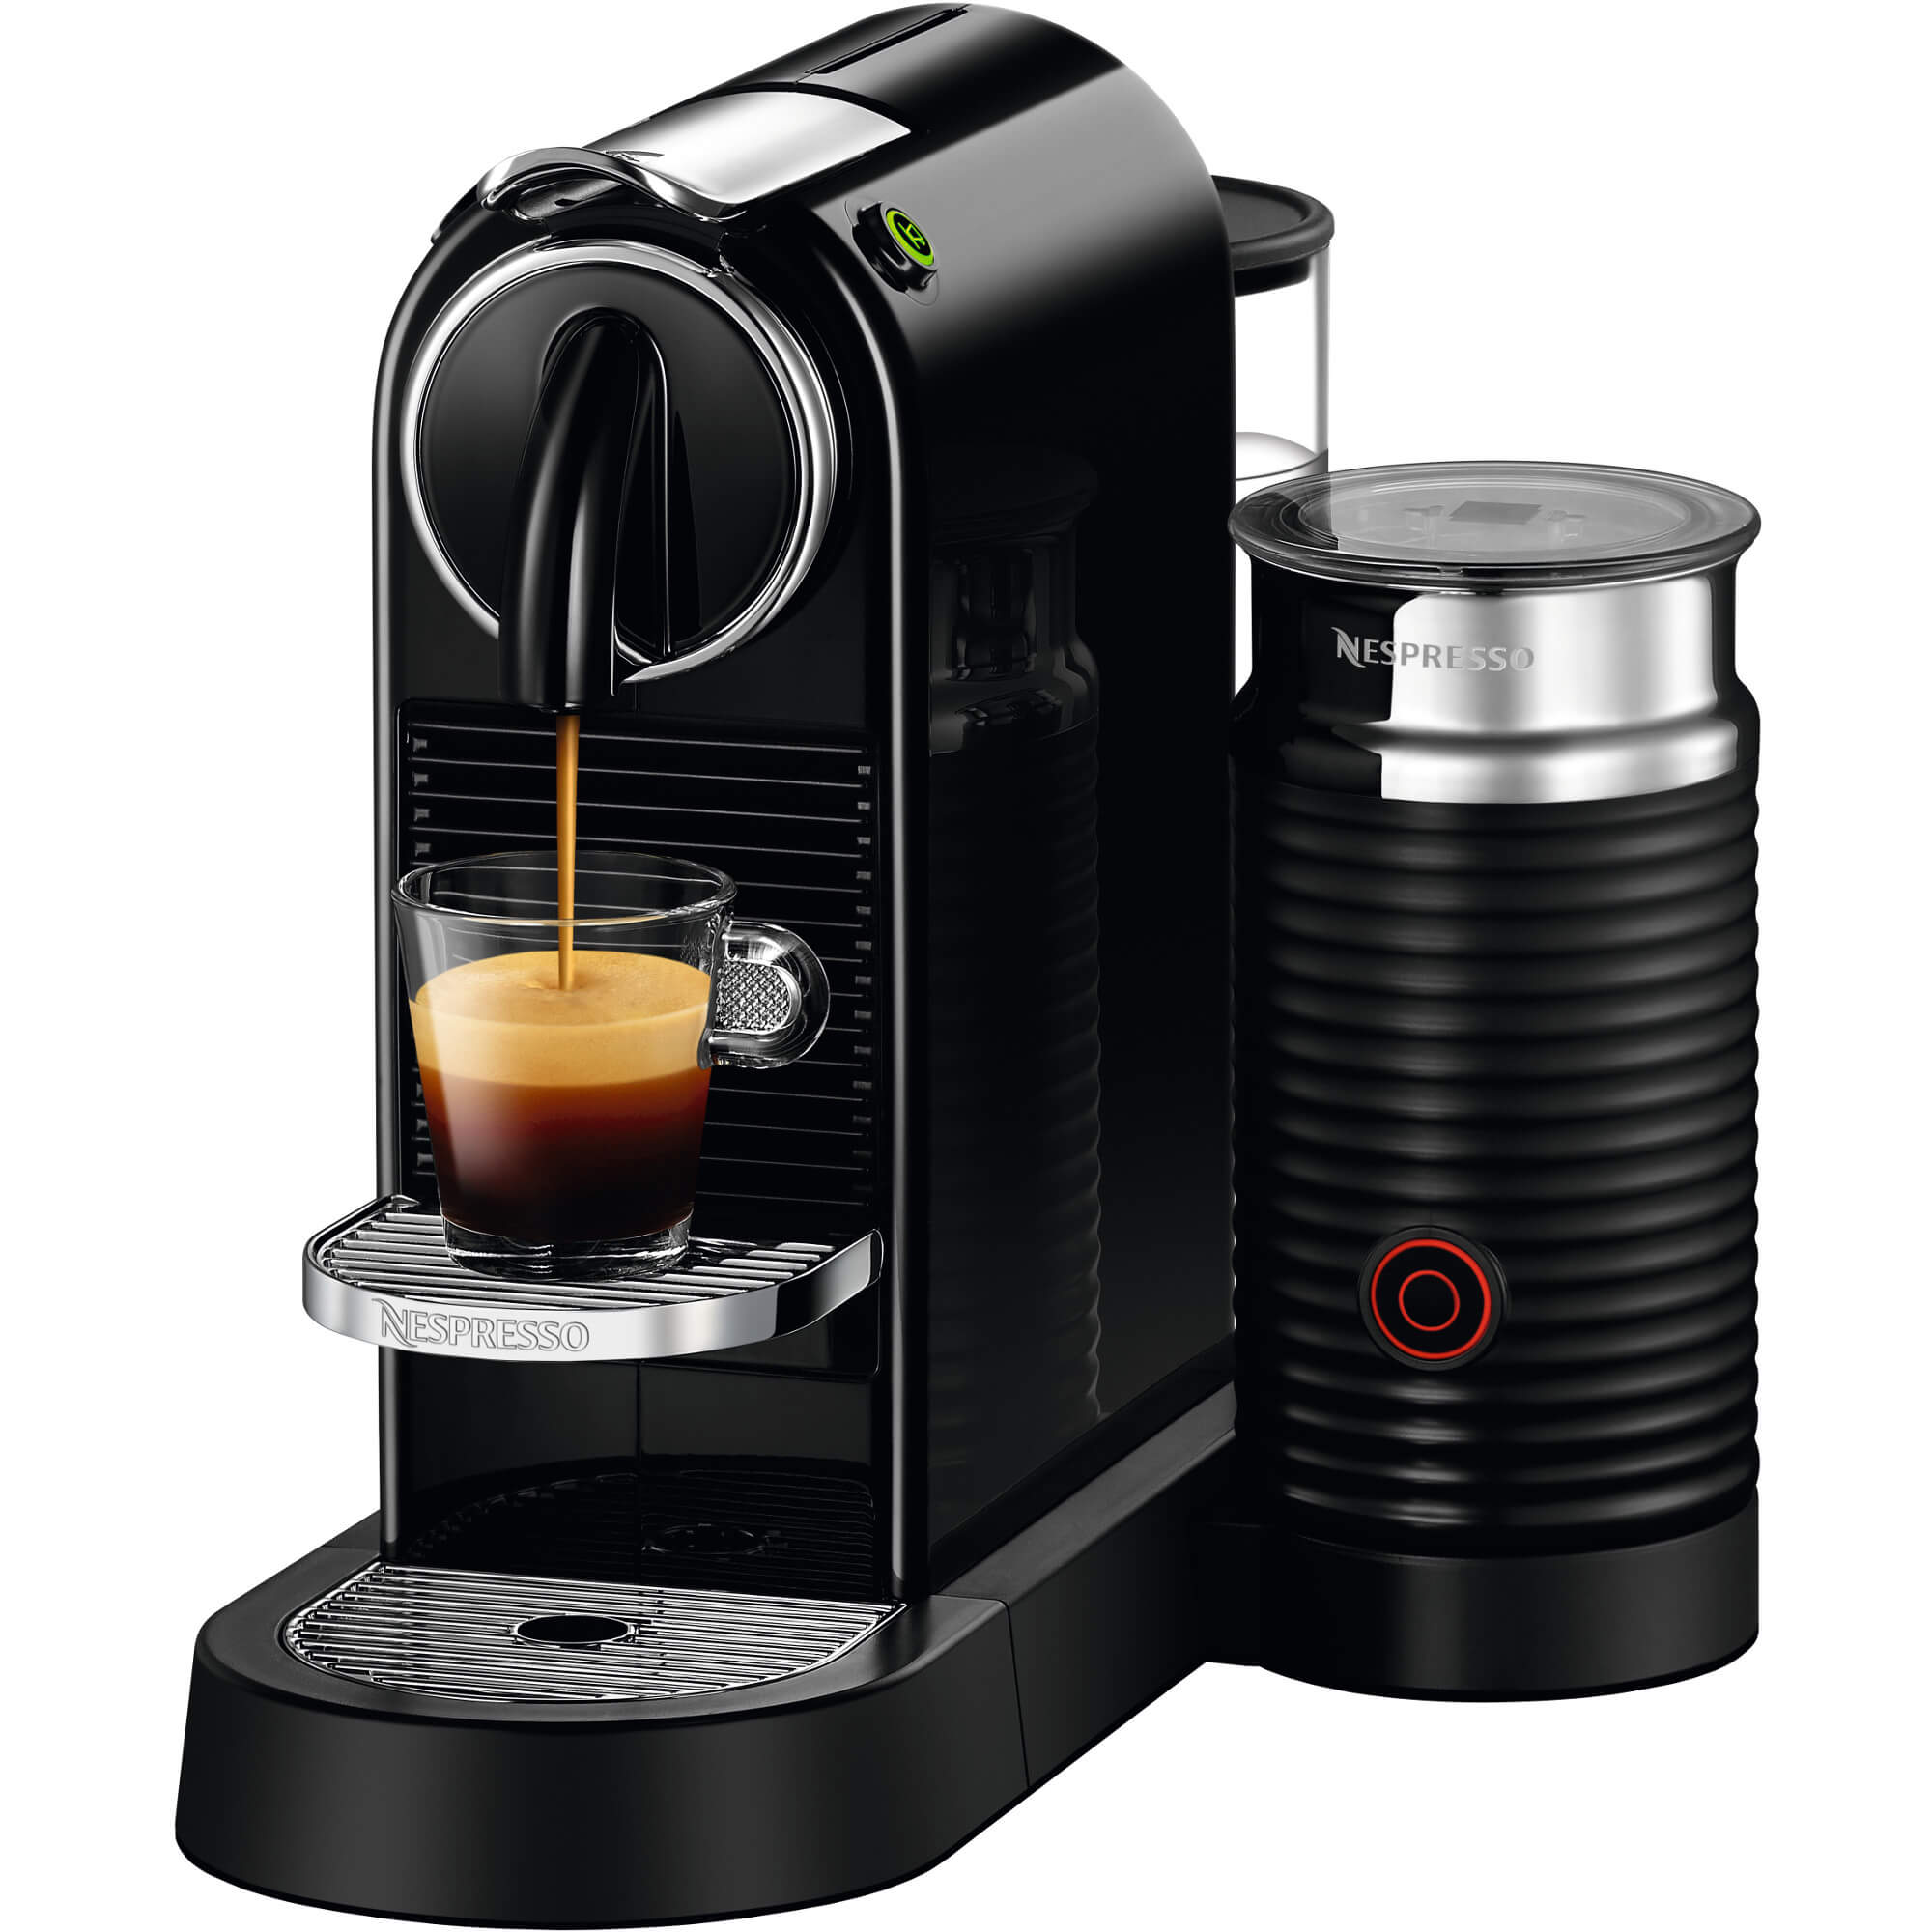  Espressor Nespresso Citiz&Milk D122, 1710 W, 1 L, 19 bar, Negru 